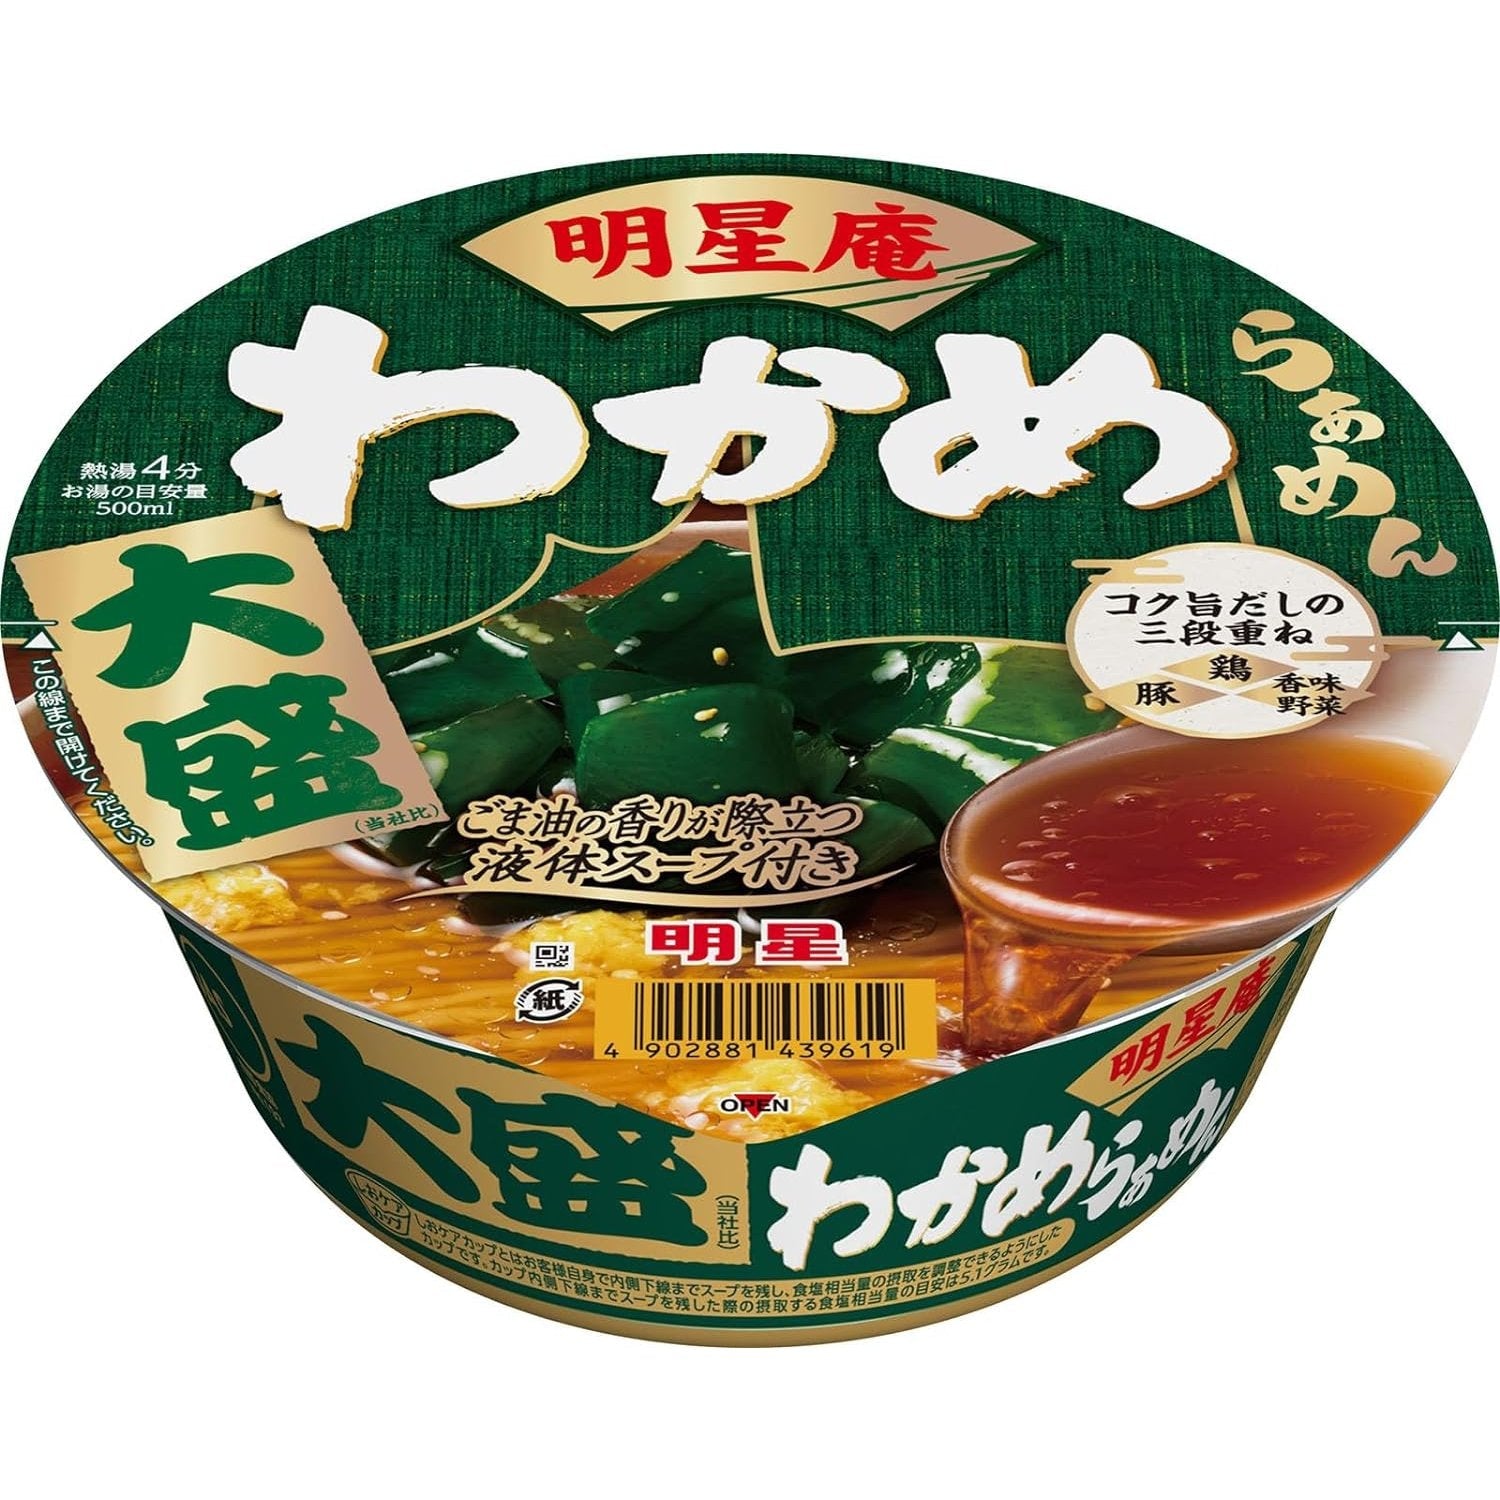 Myojo Sesame Oil Soup Base Ramen with Wakame Seaweed (Pack of 3)